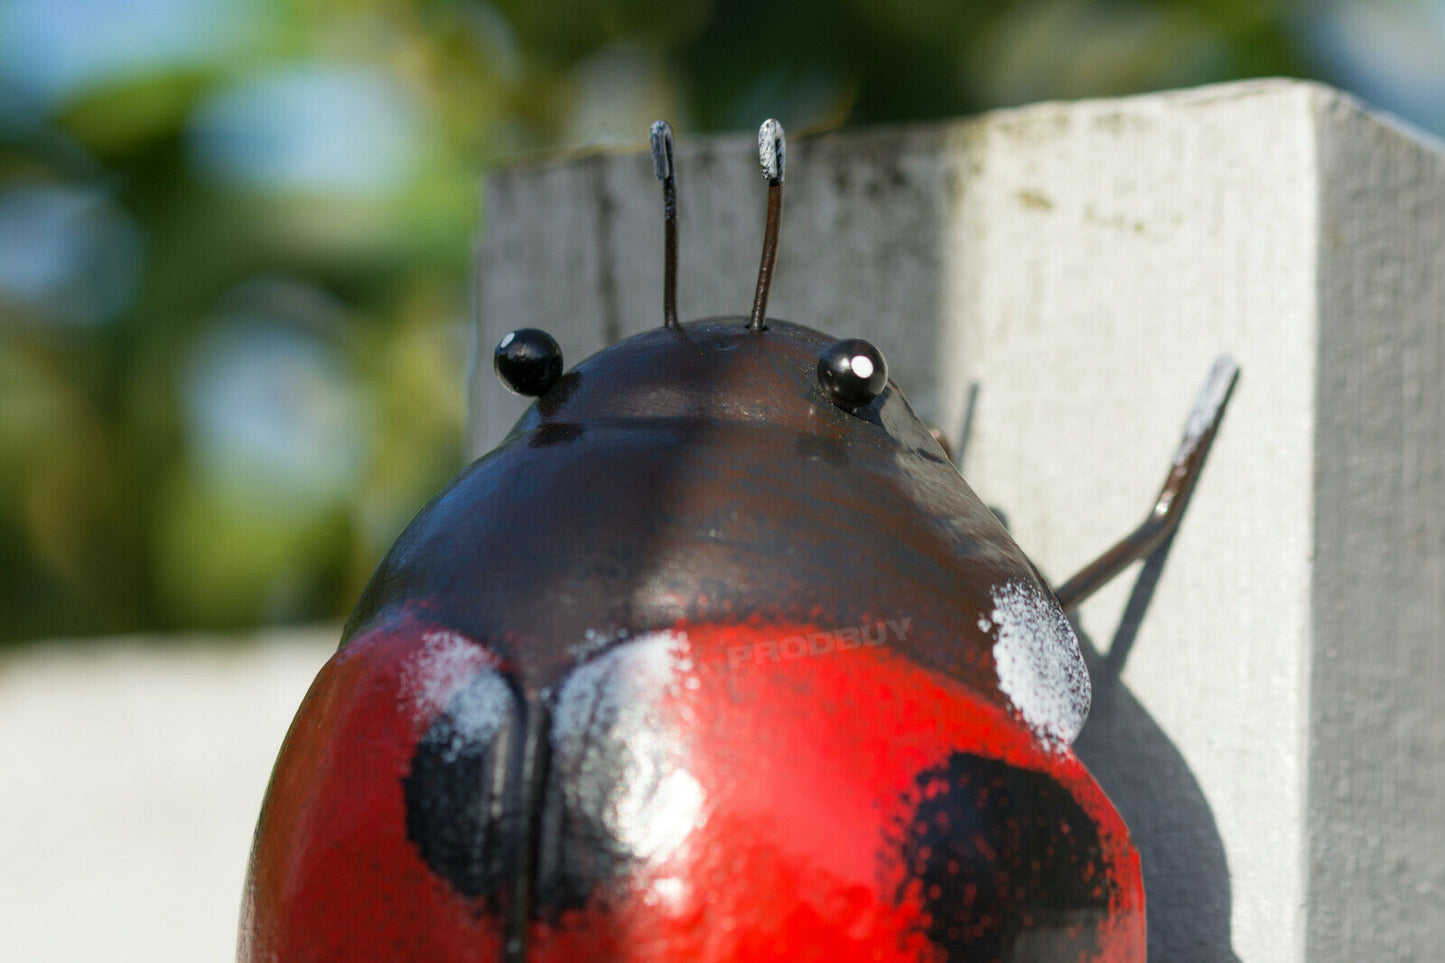 Metal Ladybird Ornament Small 12cm